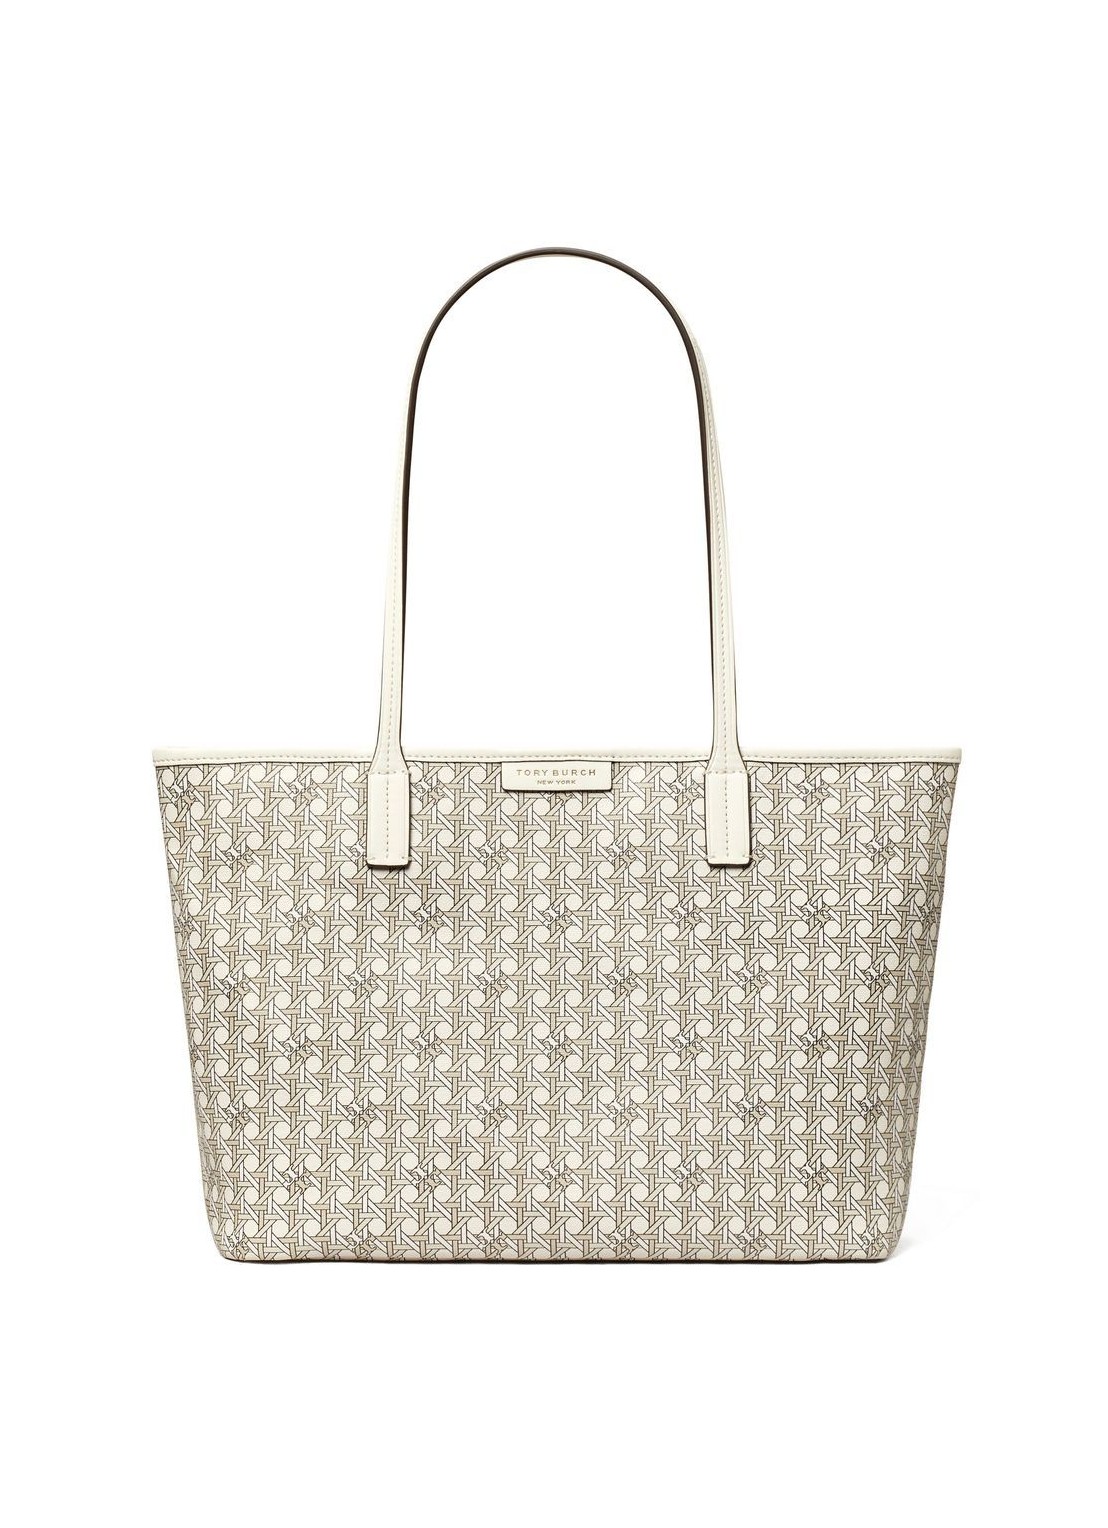 Handbag tory burch handbag woman ever-ready small tote 147748104 104 talla blanco
 